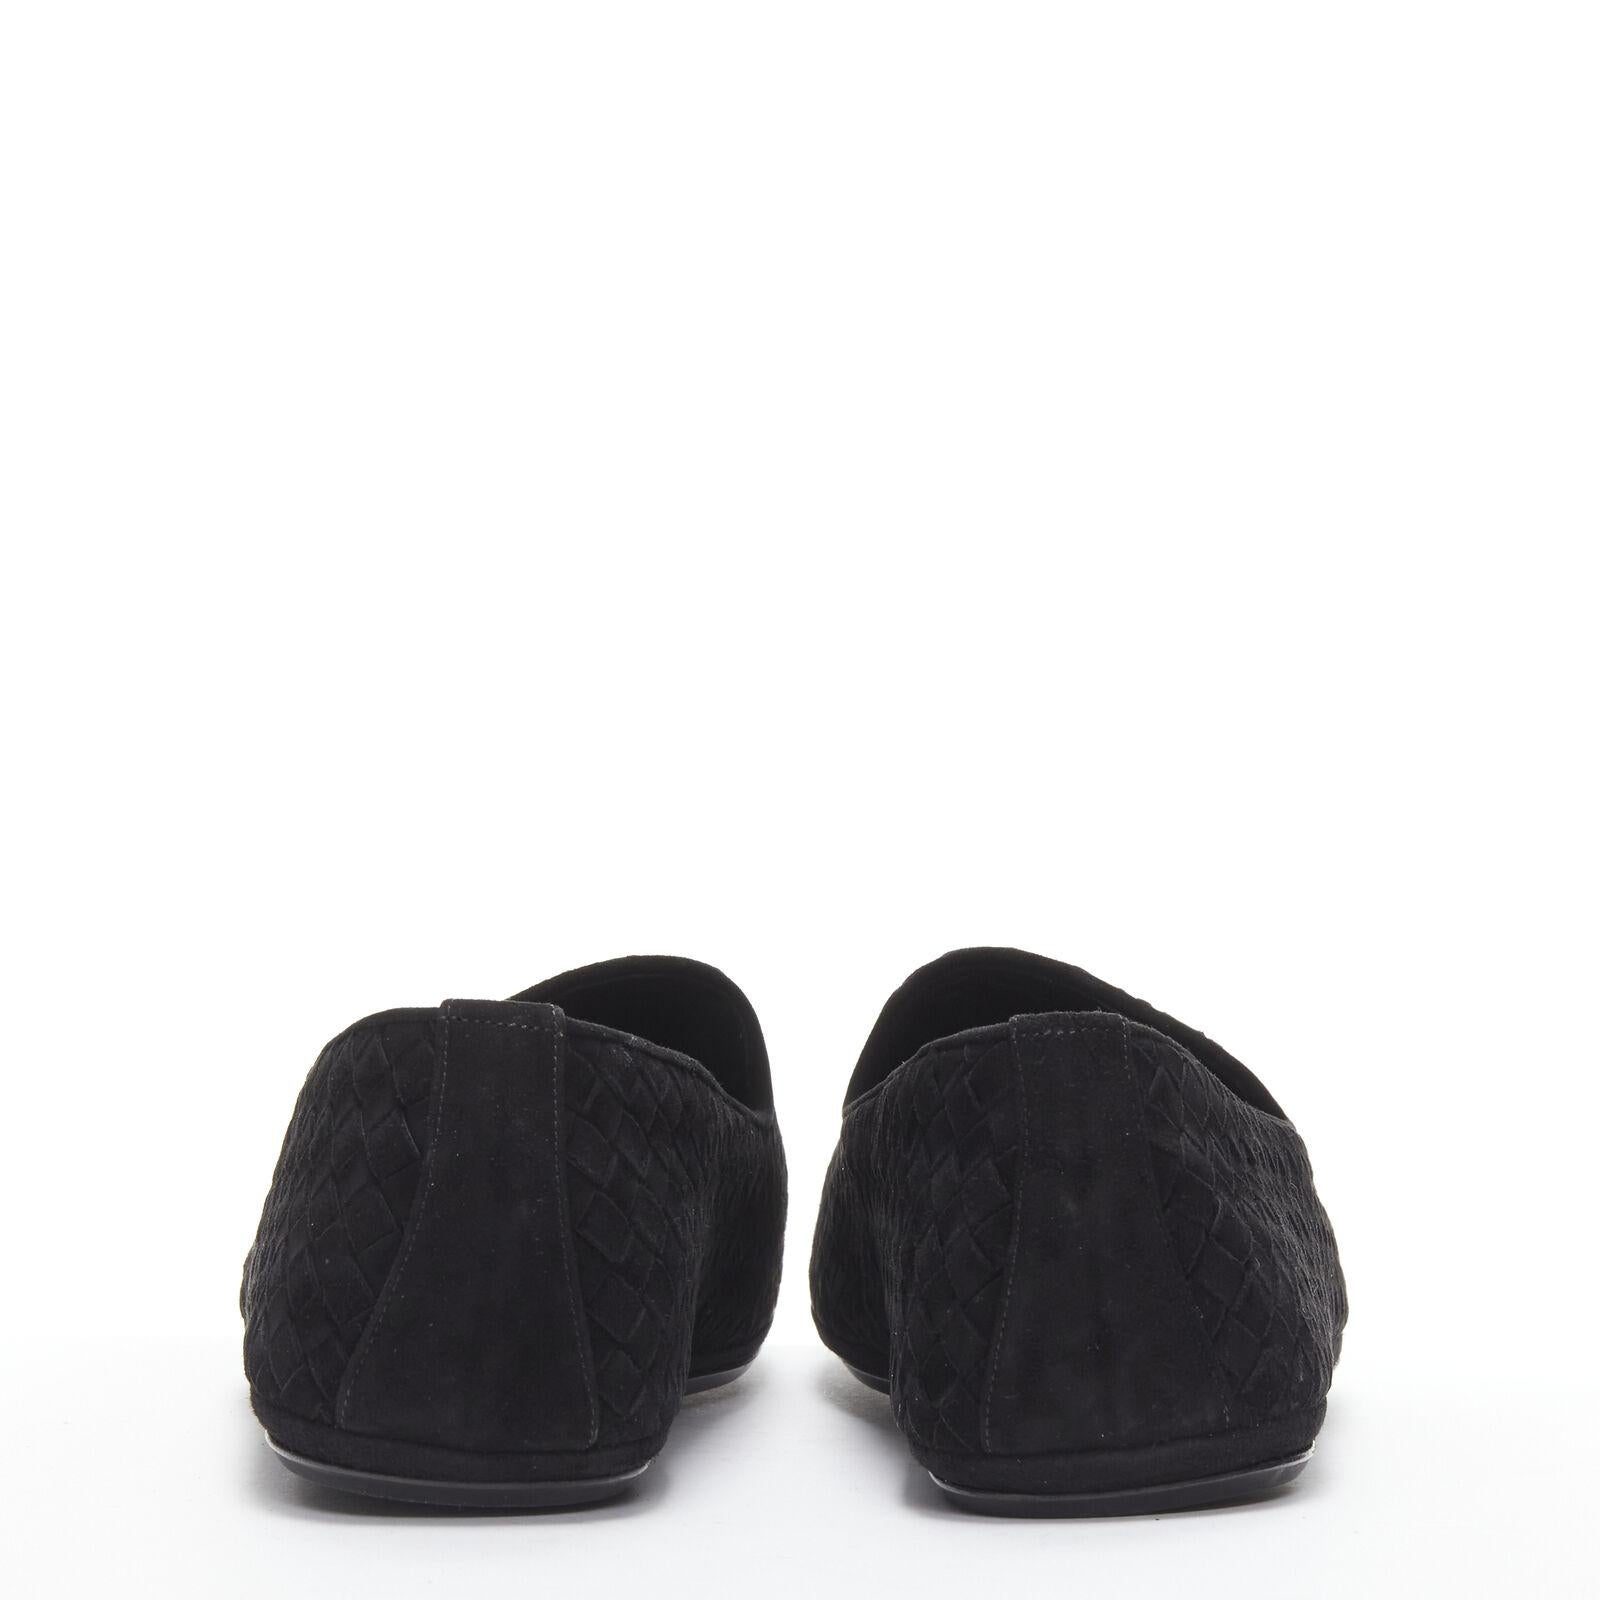 Men's new BOTTEGA VENETA Intrecciato Luxe suede black woven dress loafer shoes EU42.5